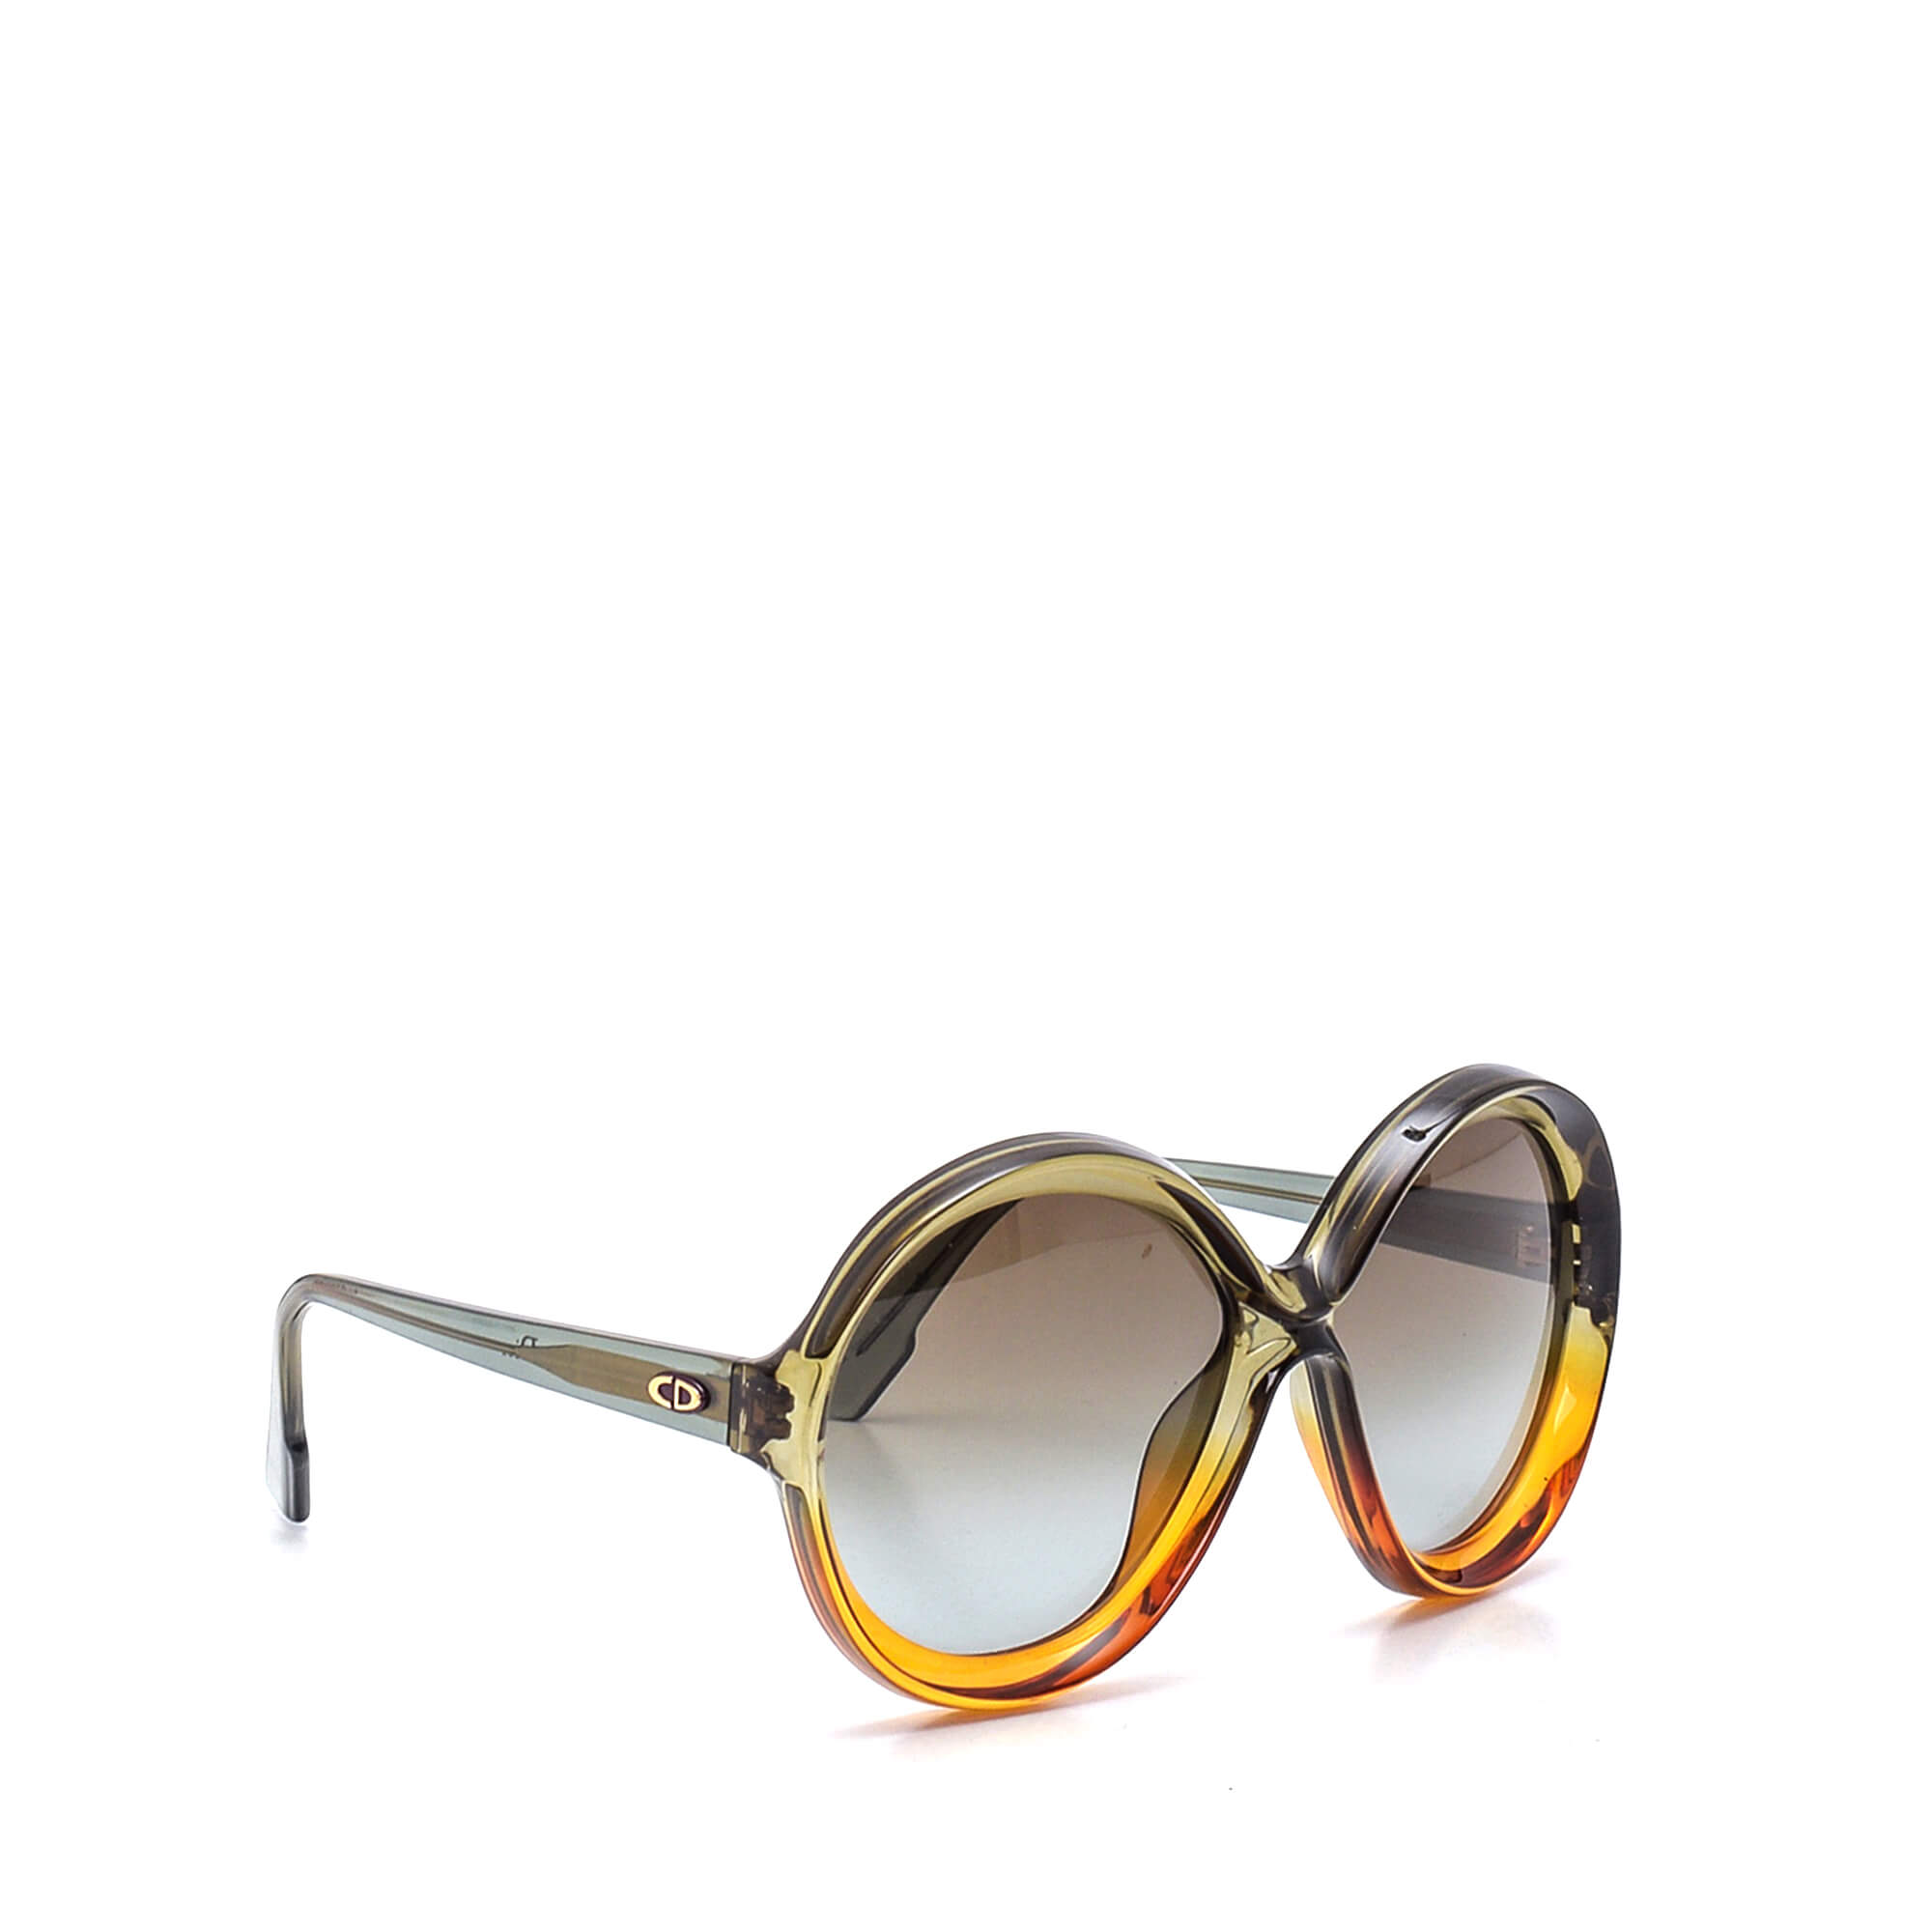 Christian Dior - Degrade Oversize Sunglasses